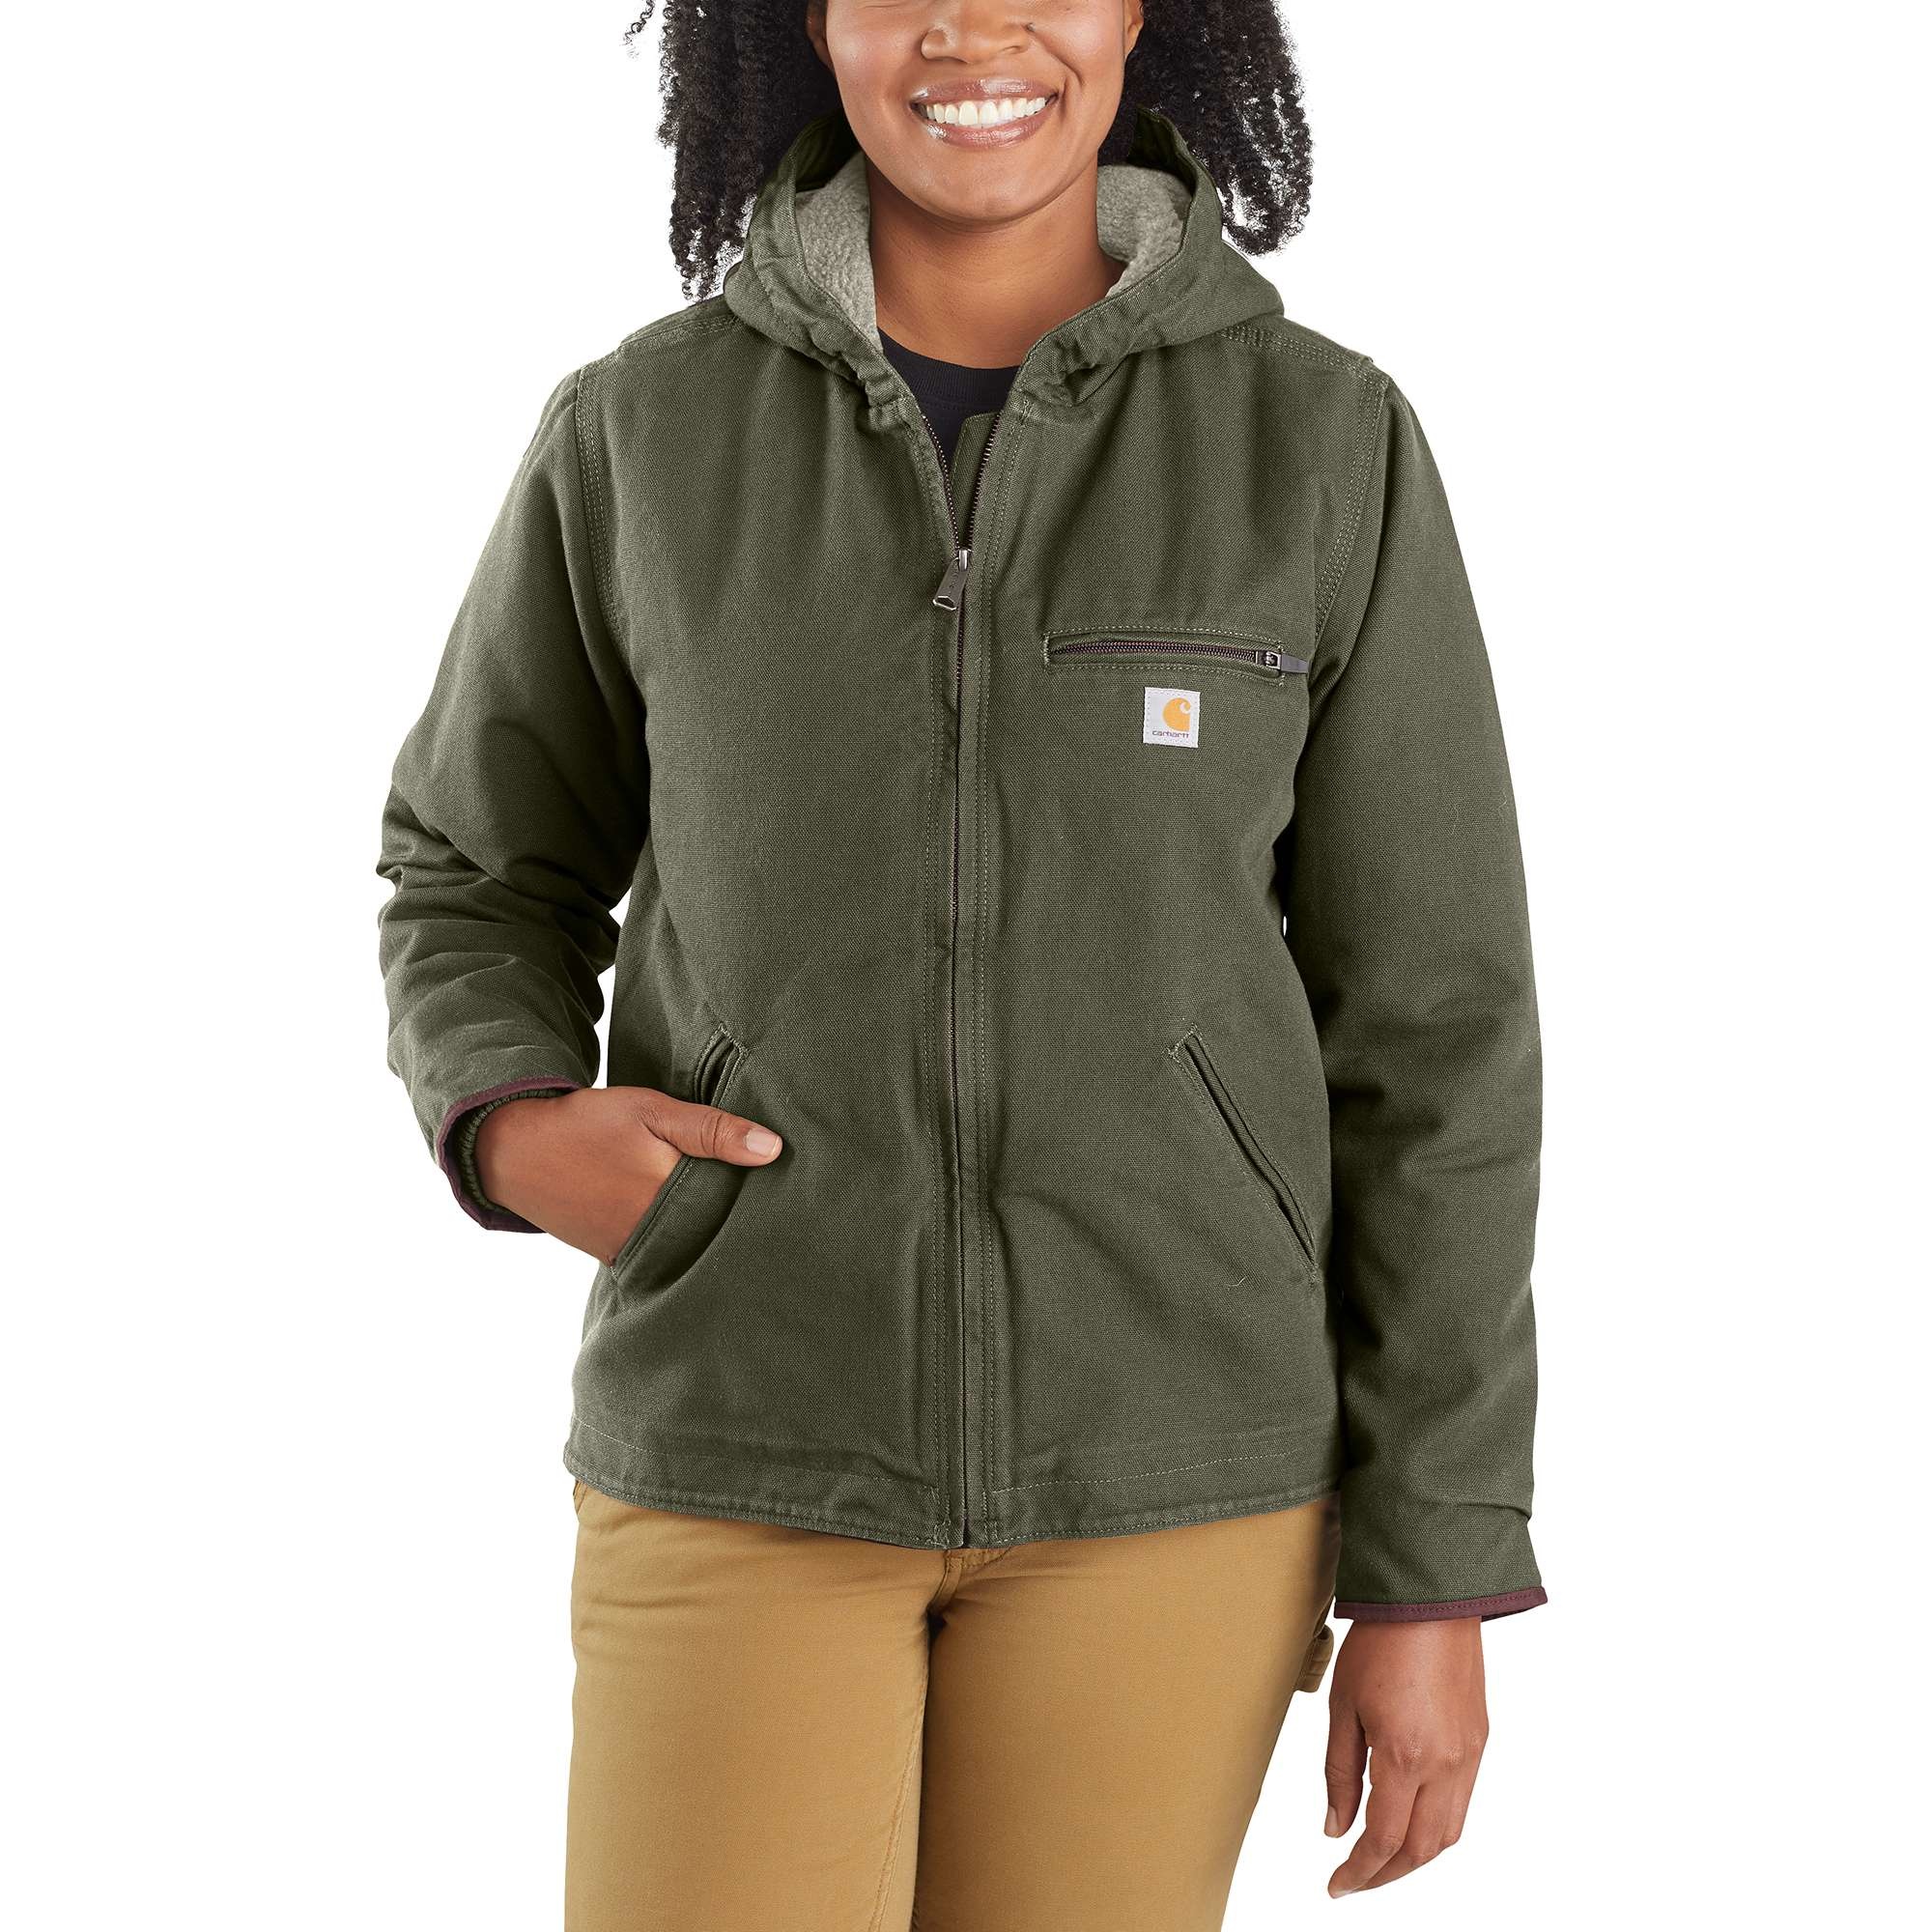 104292 - Carhartt Women's Washed Duck Sherpa Lined Jacket